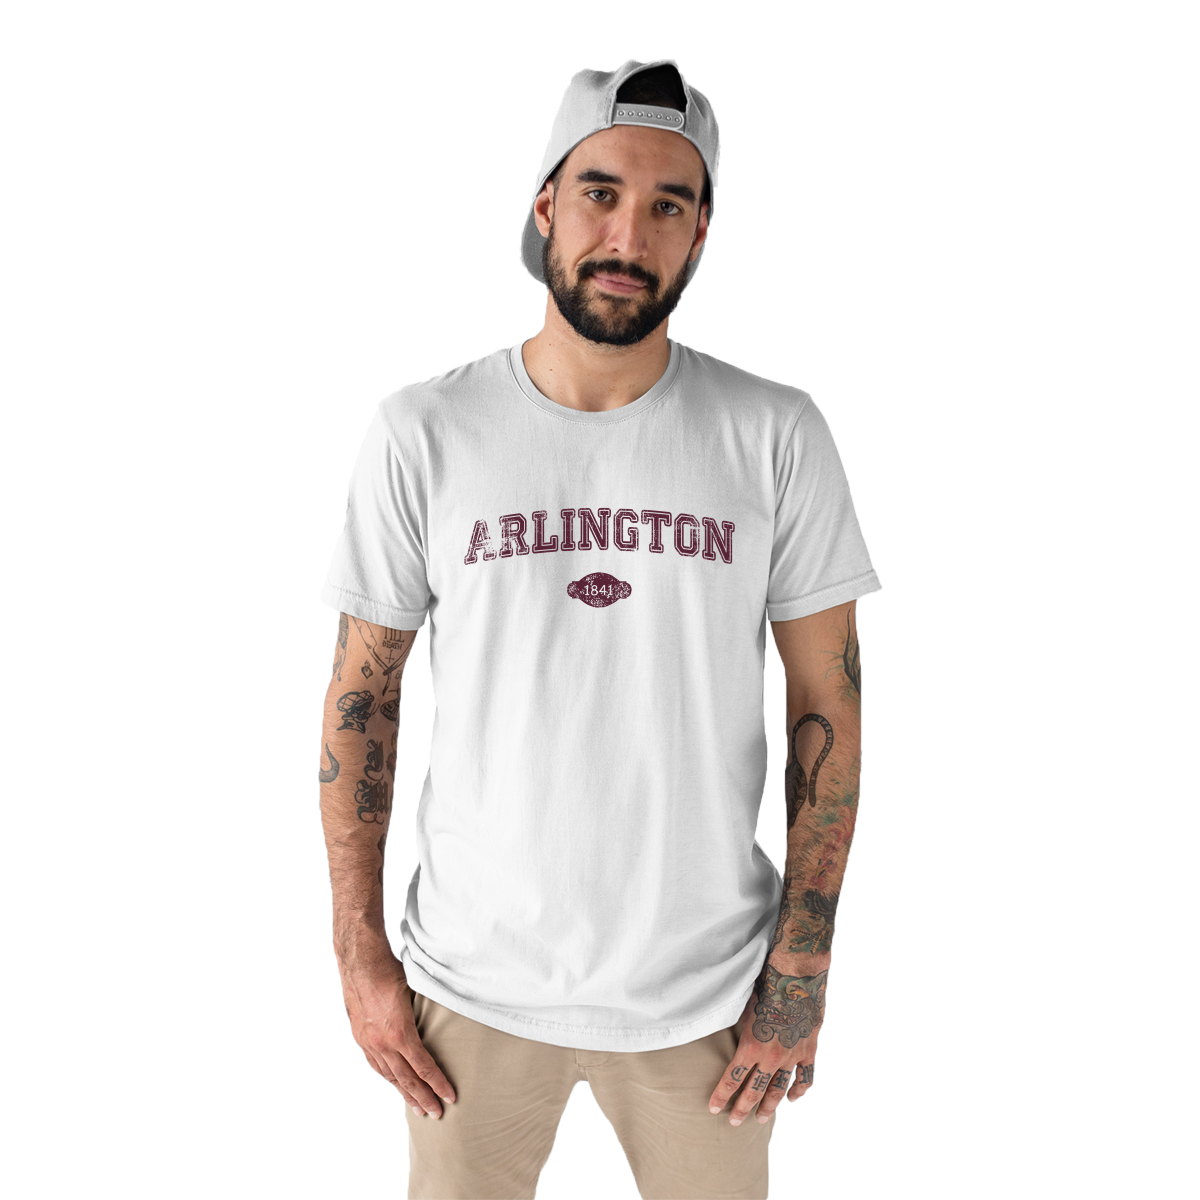 Arlington 1841 Represent Men's T-shirt | White